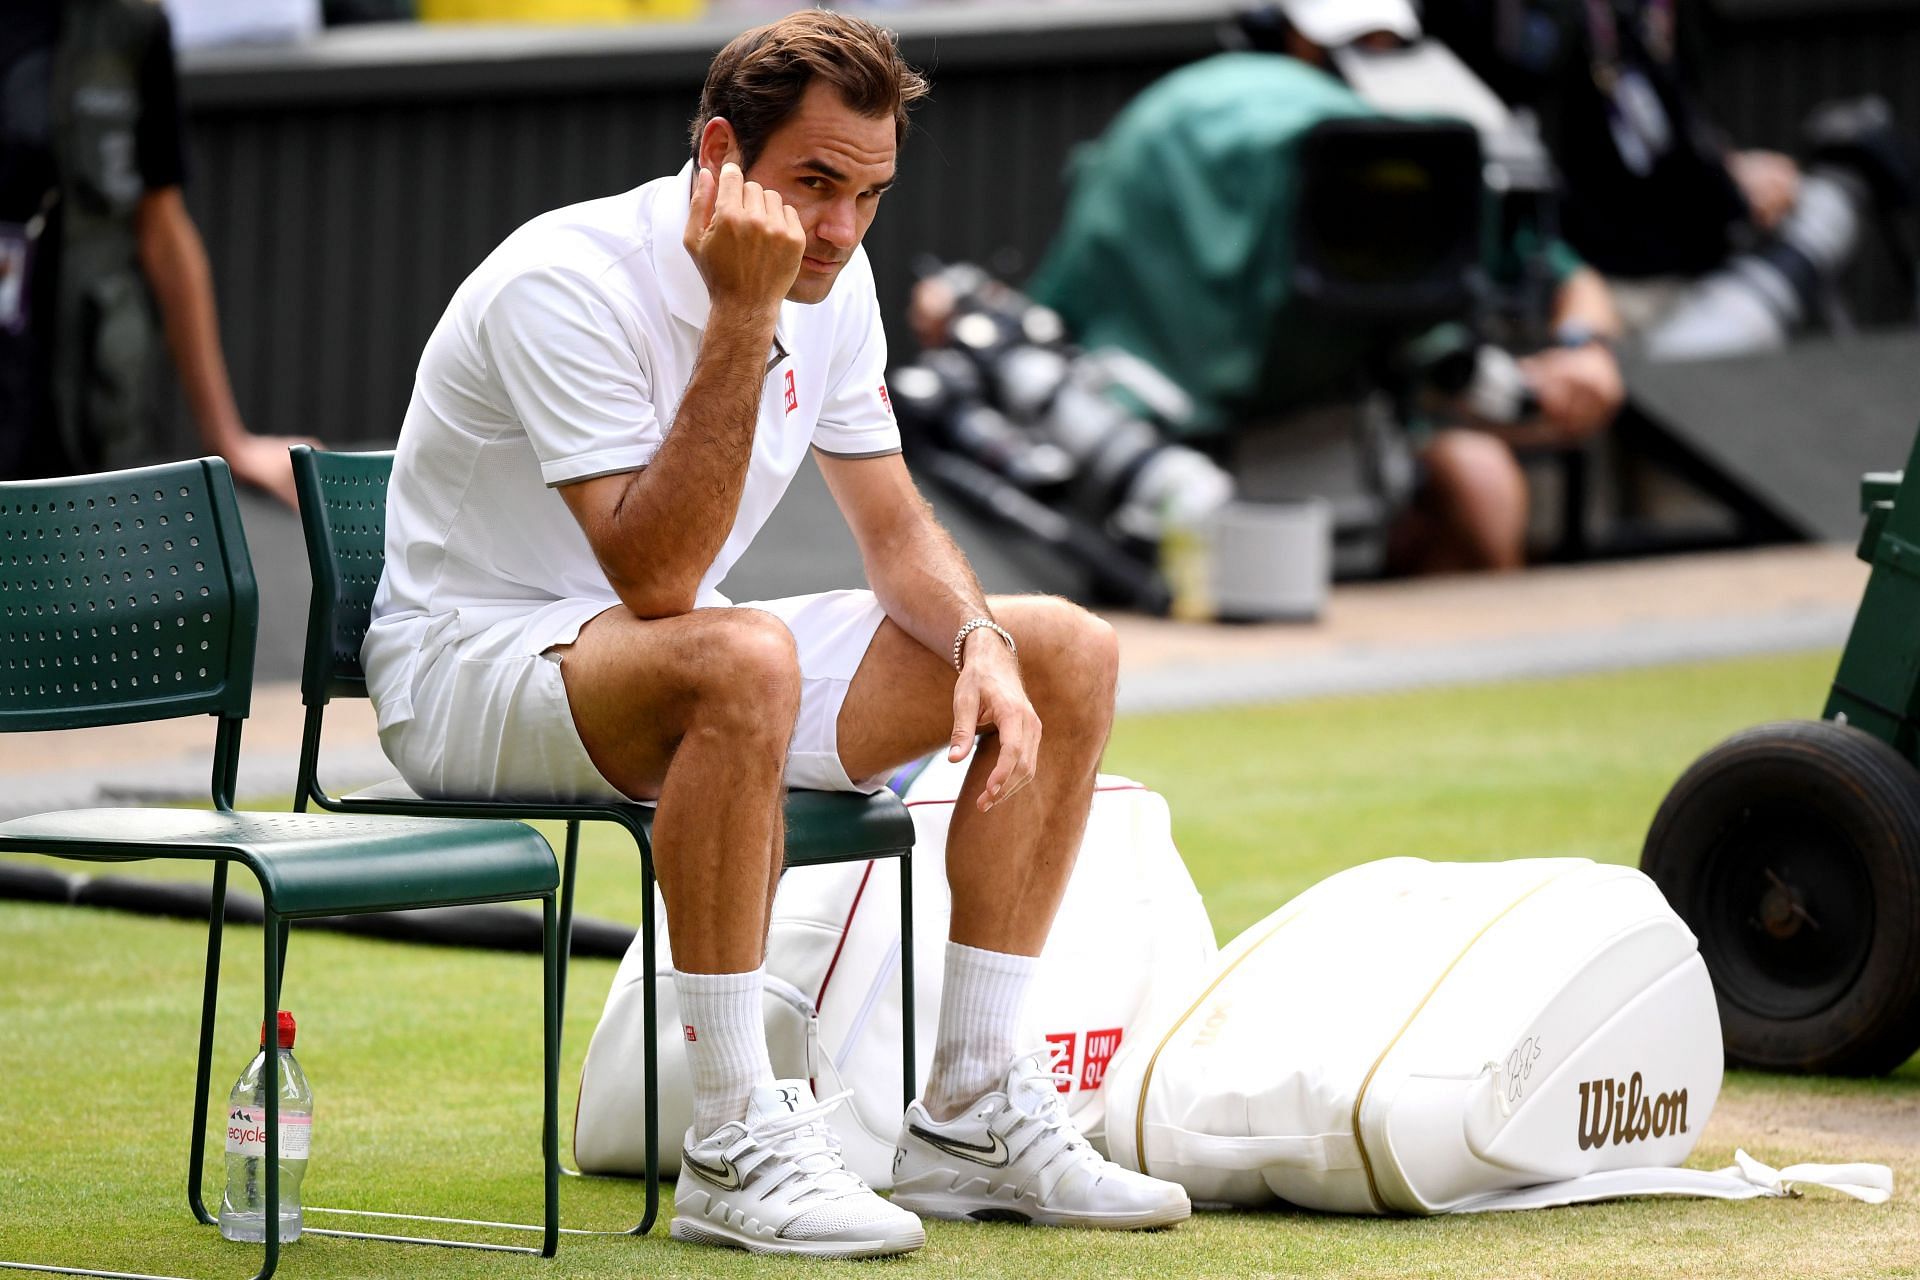 Roger Federer after the 2019 Wimbledon final against Novak Djokovic